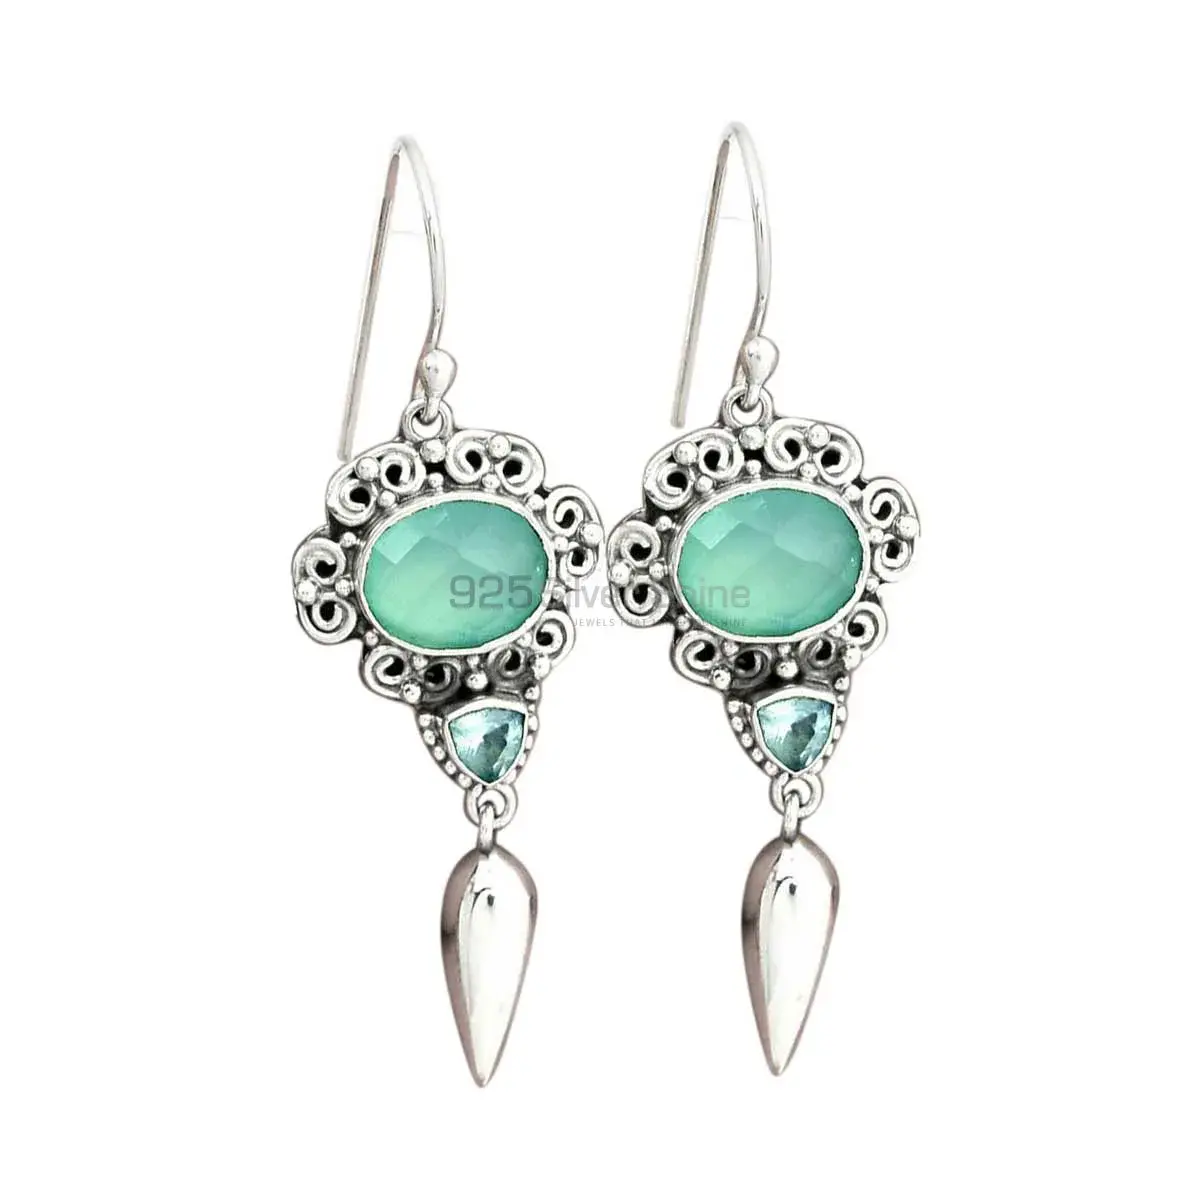 Natural Multi Gemstone Earrings Suppliers In 925 Sterling Silver Jewelry 925SE2445